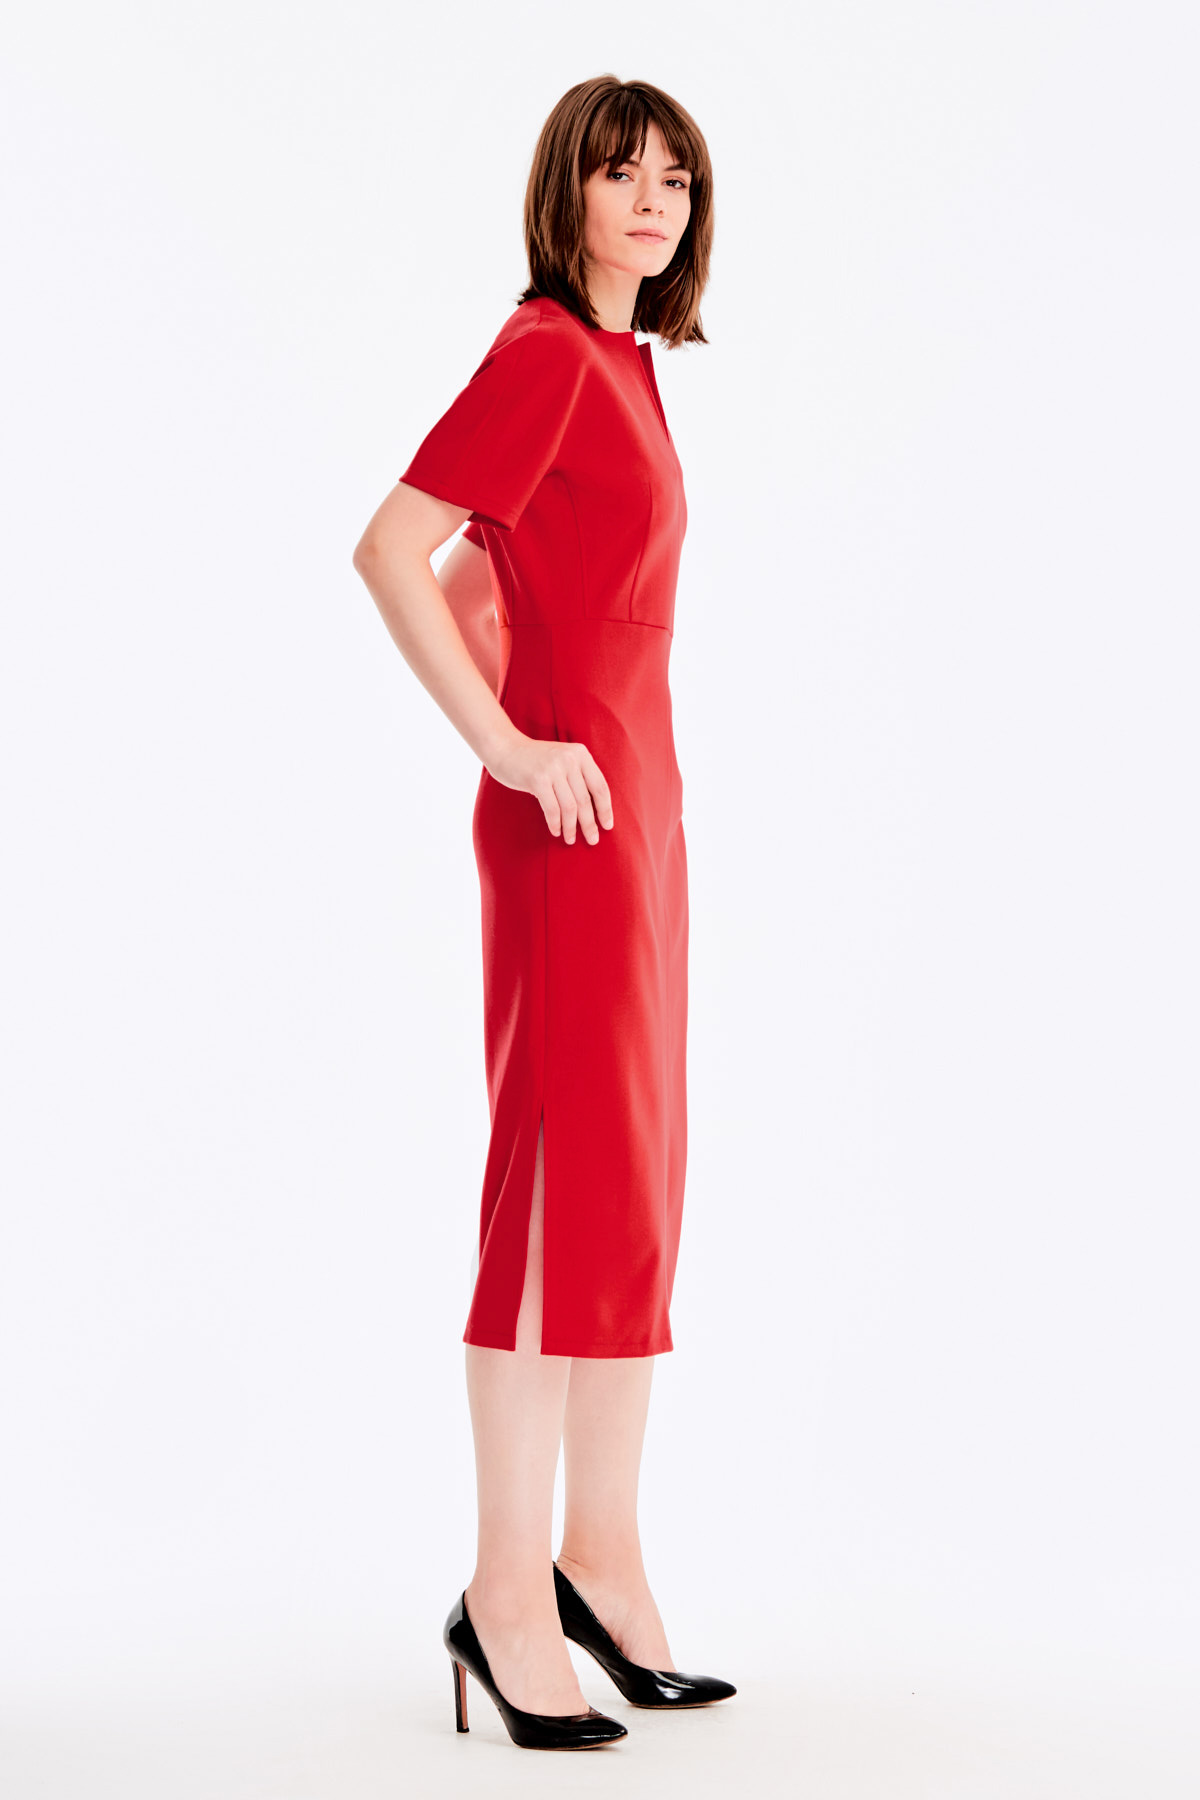 V-neck red dress with slits  , photo 7